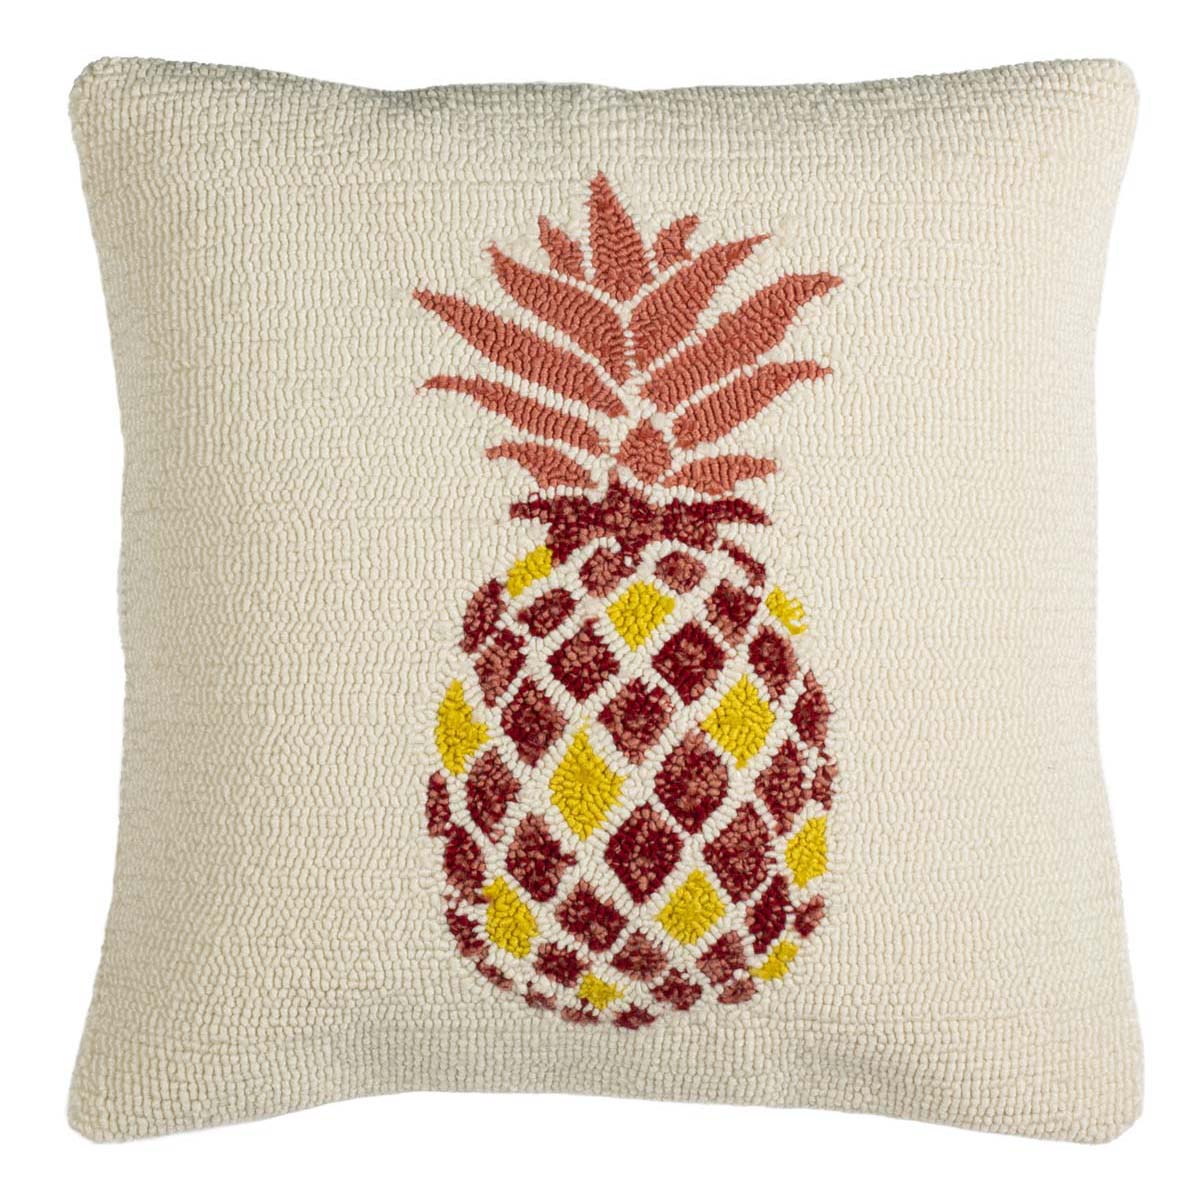 Safavieh Pure Pineapple Pillow , PPL255